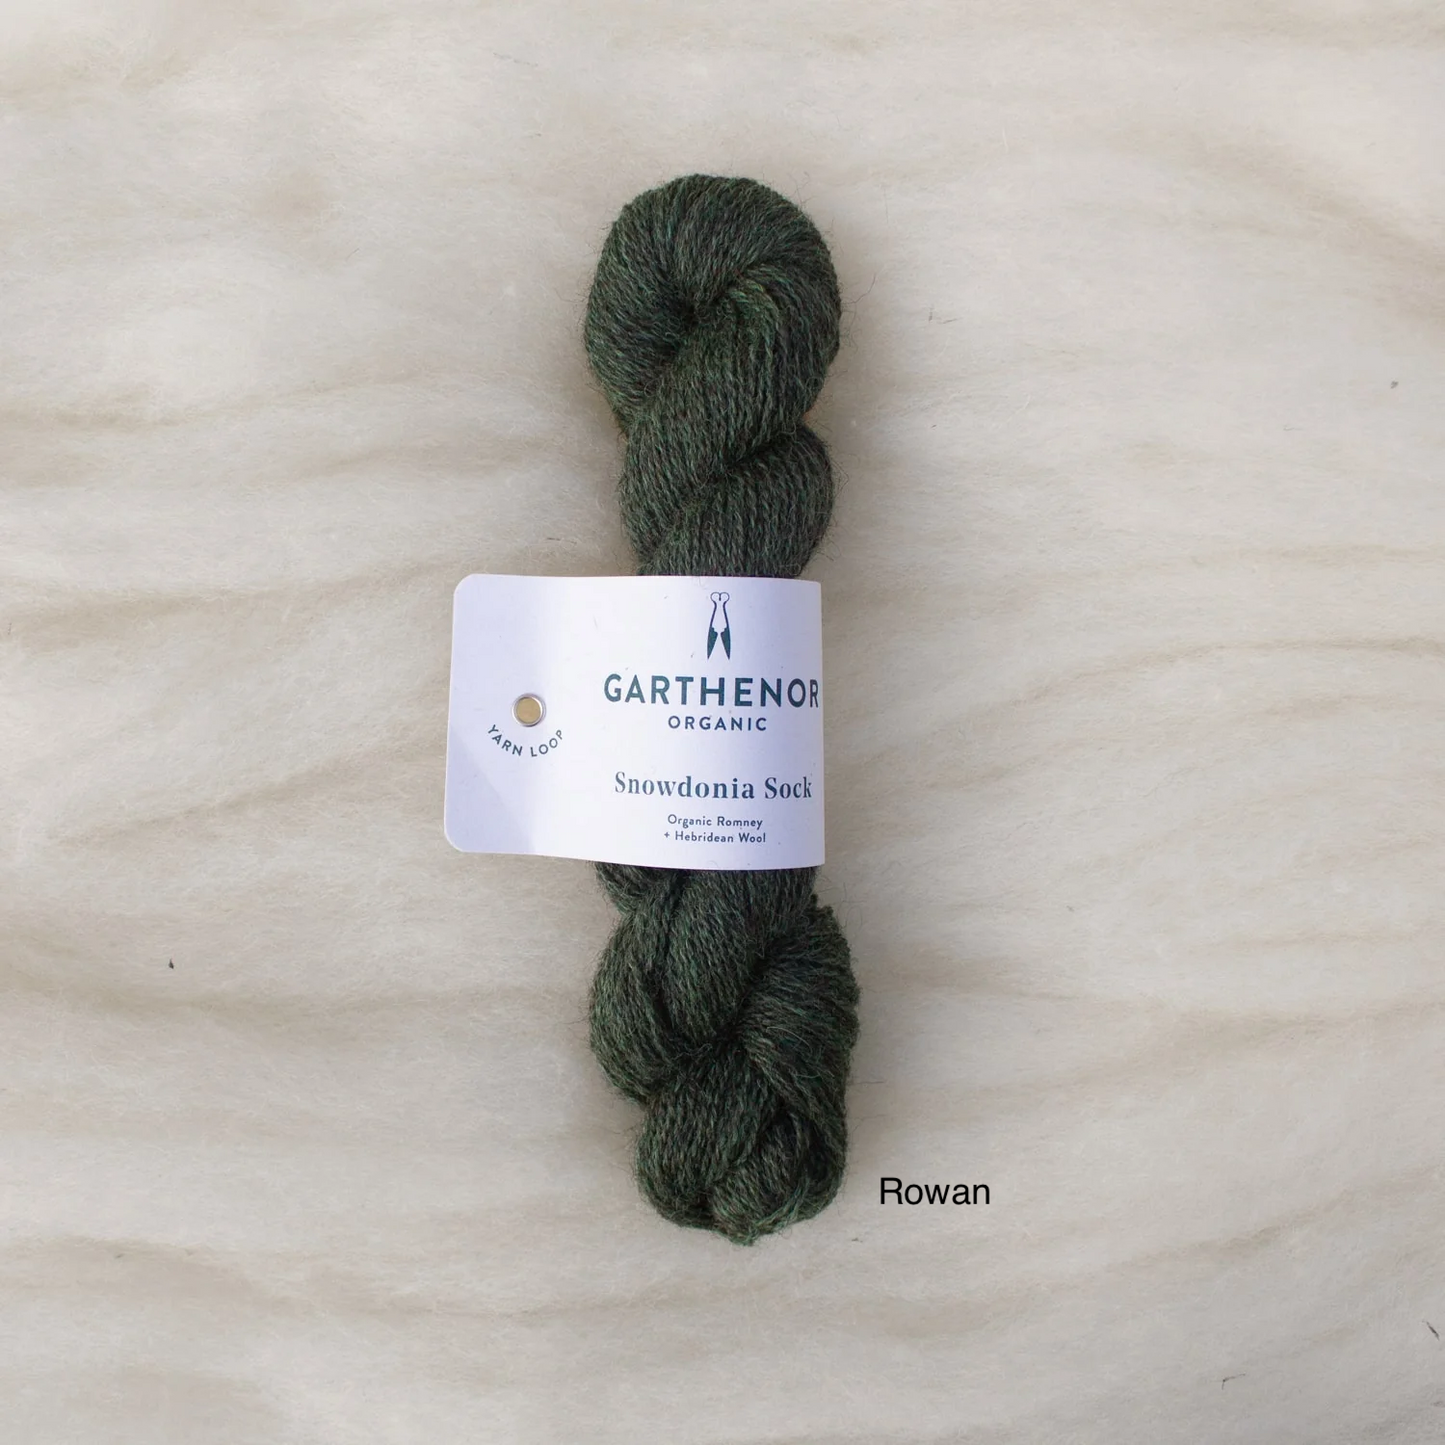 Snowdonia Sock, Garthenor Organic